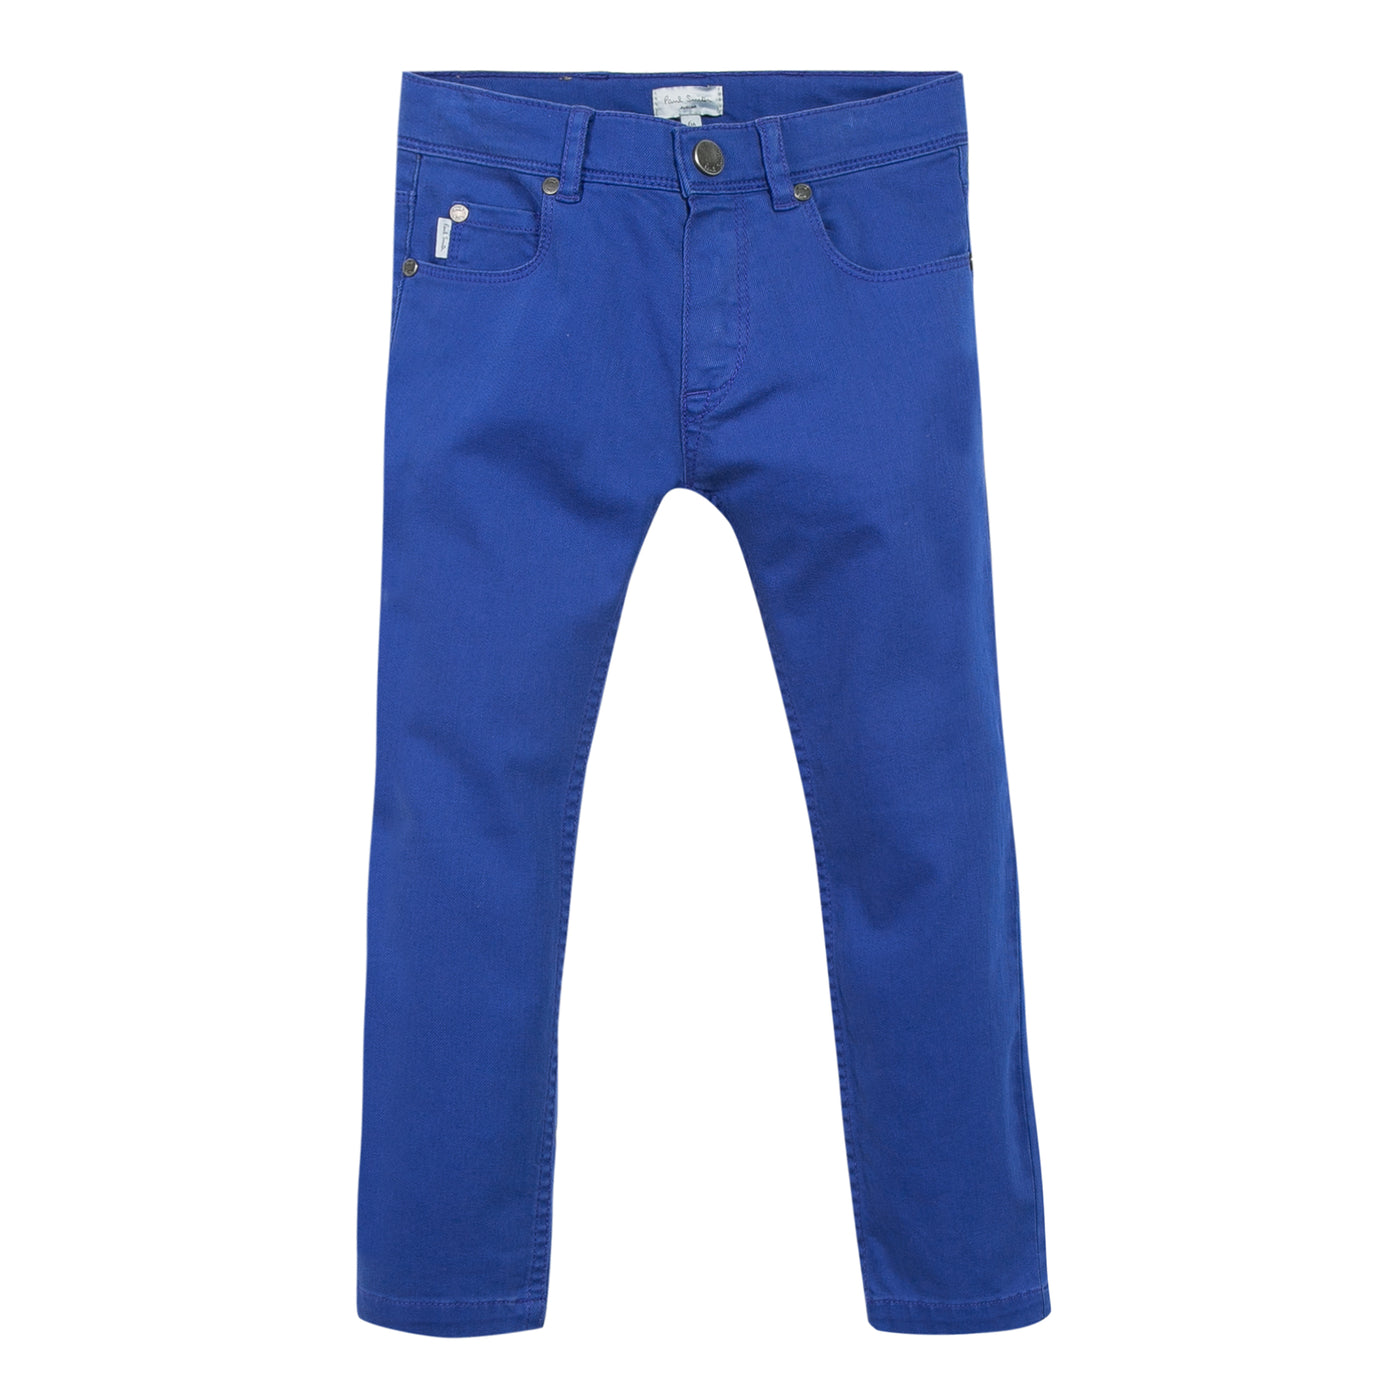 Paul Smith Junior Royal Blue Jeans 5K22552 45